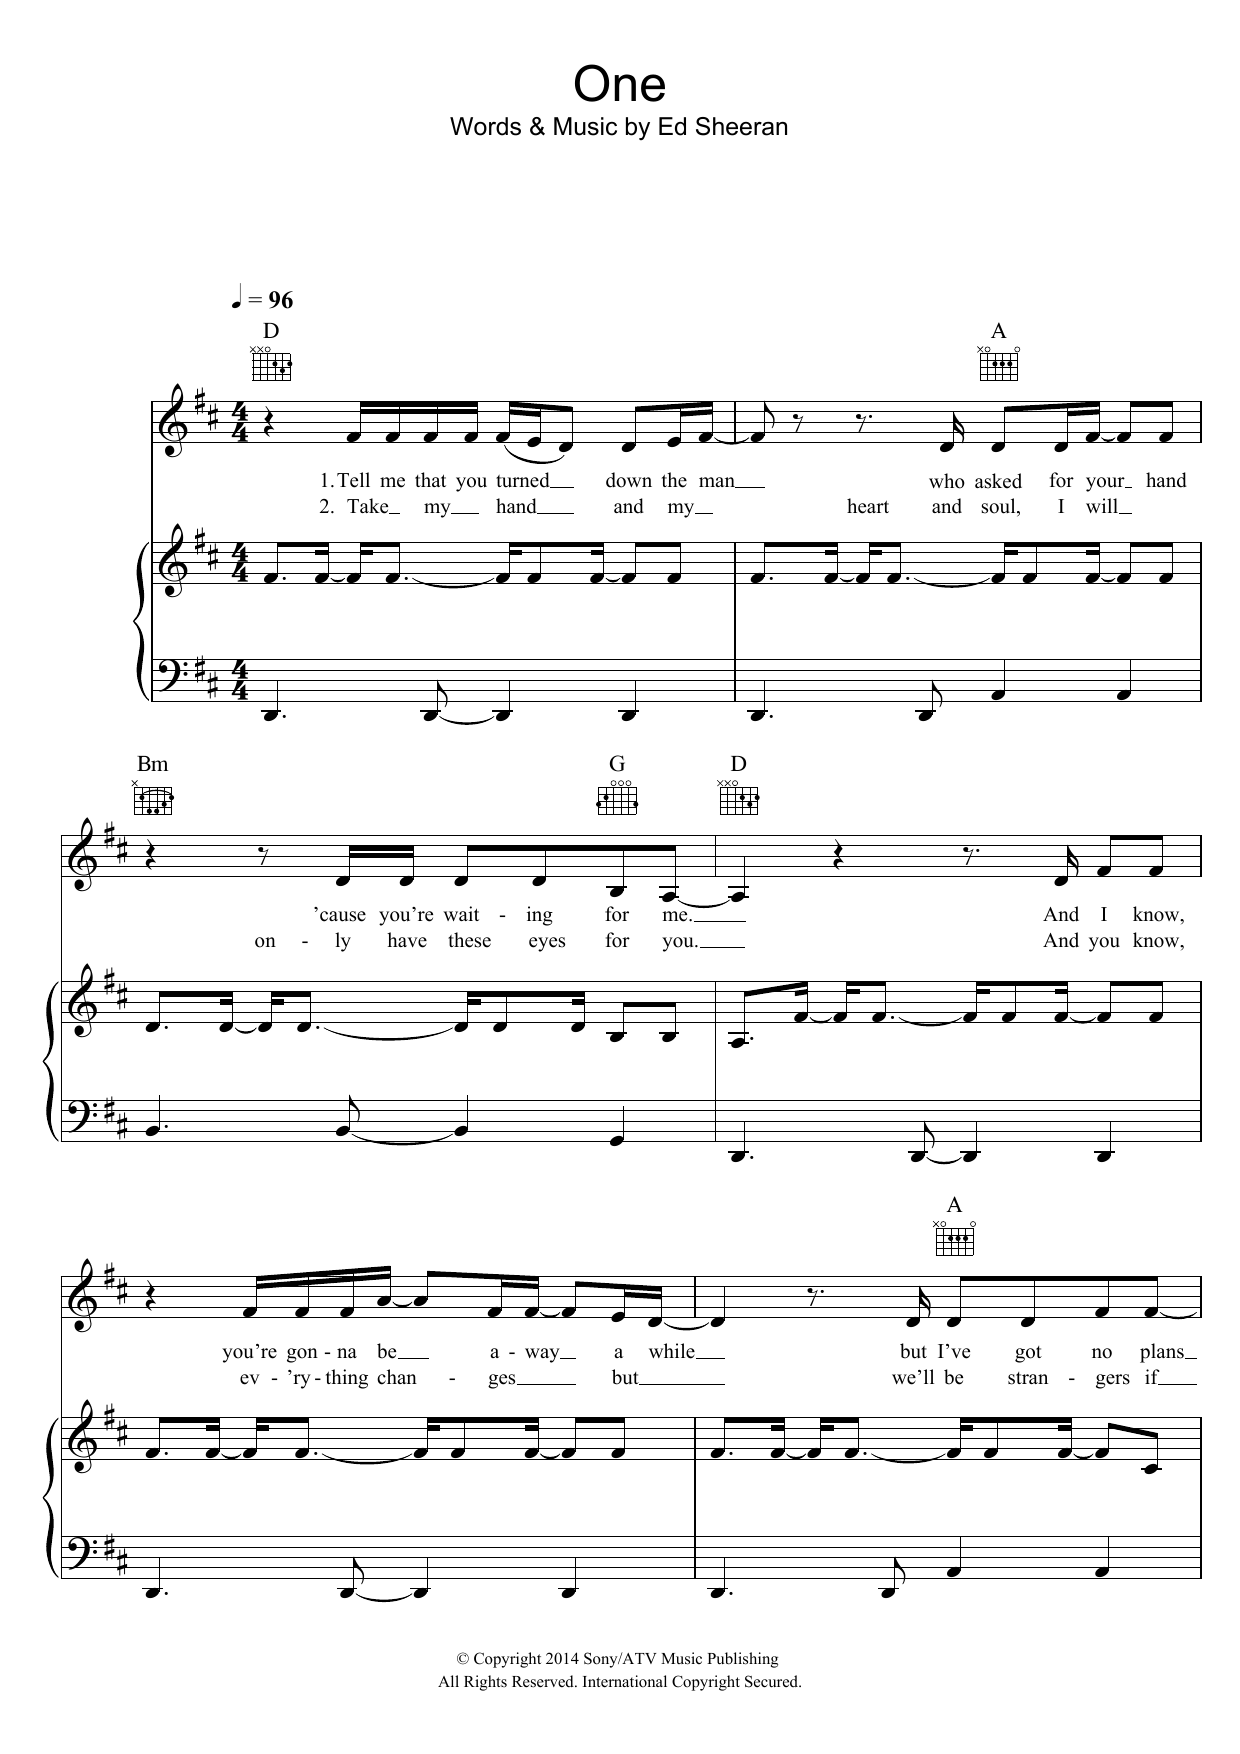 Ed Sheeran One Sheet Music Notes & Chords for Ukulele - Download or Print PDF